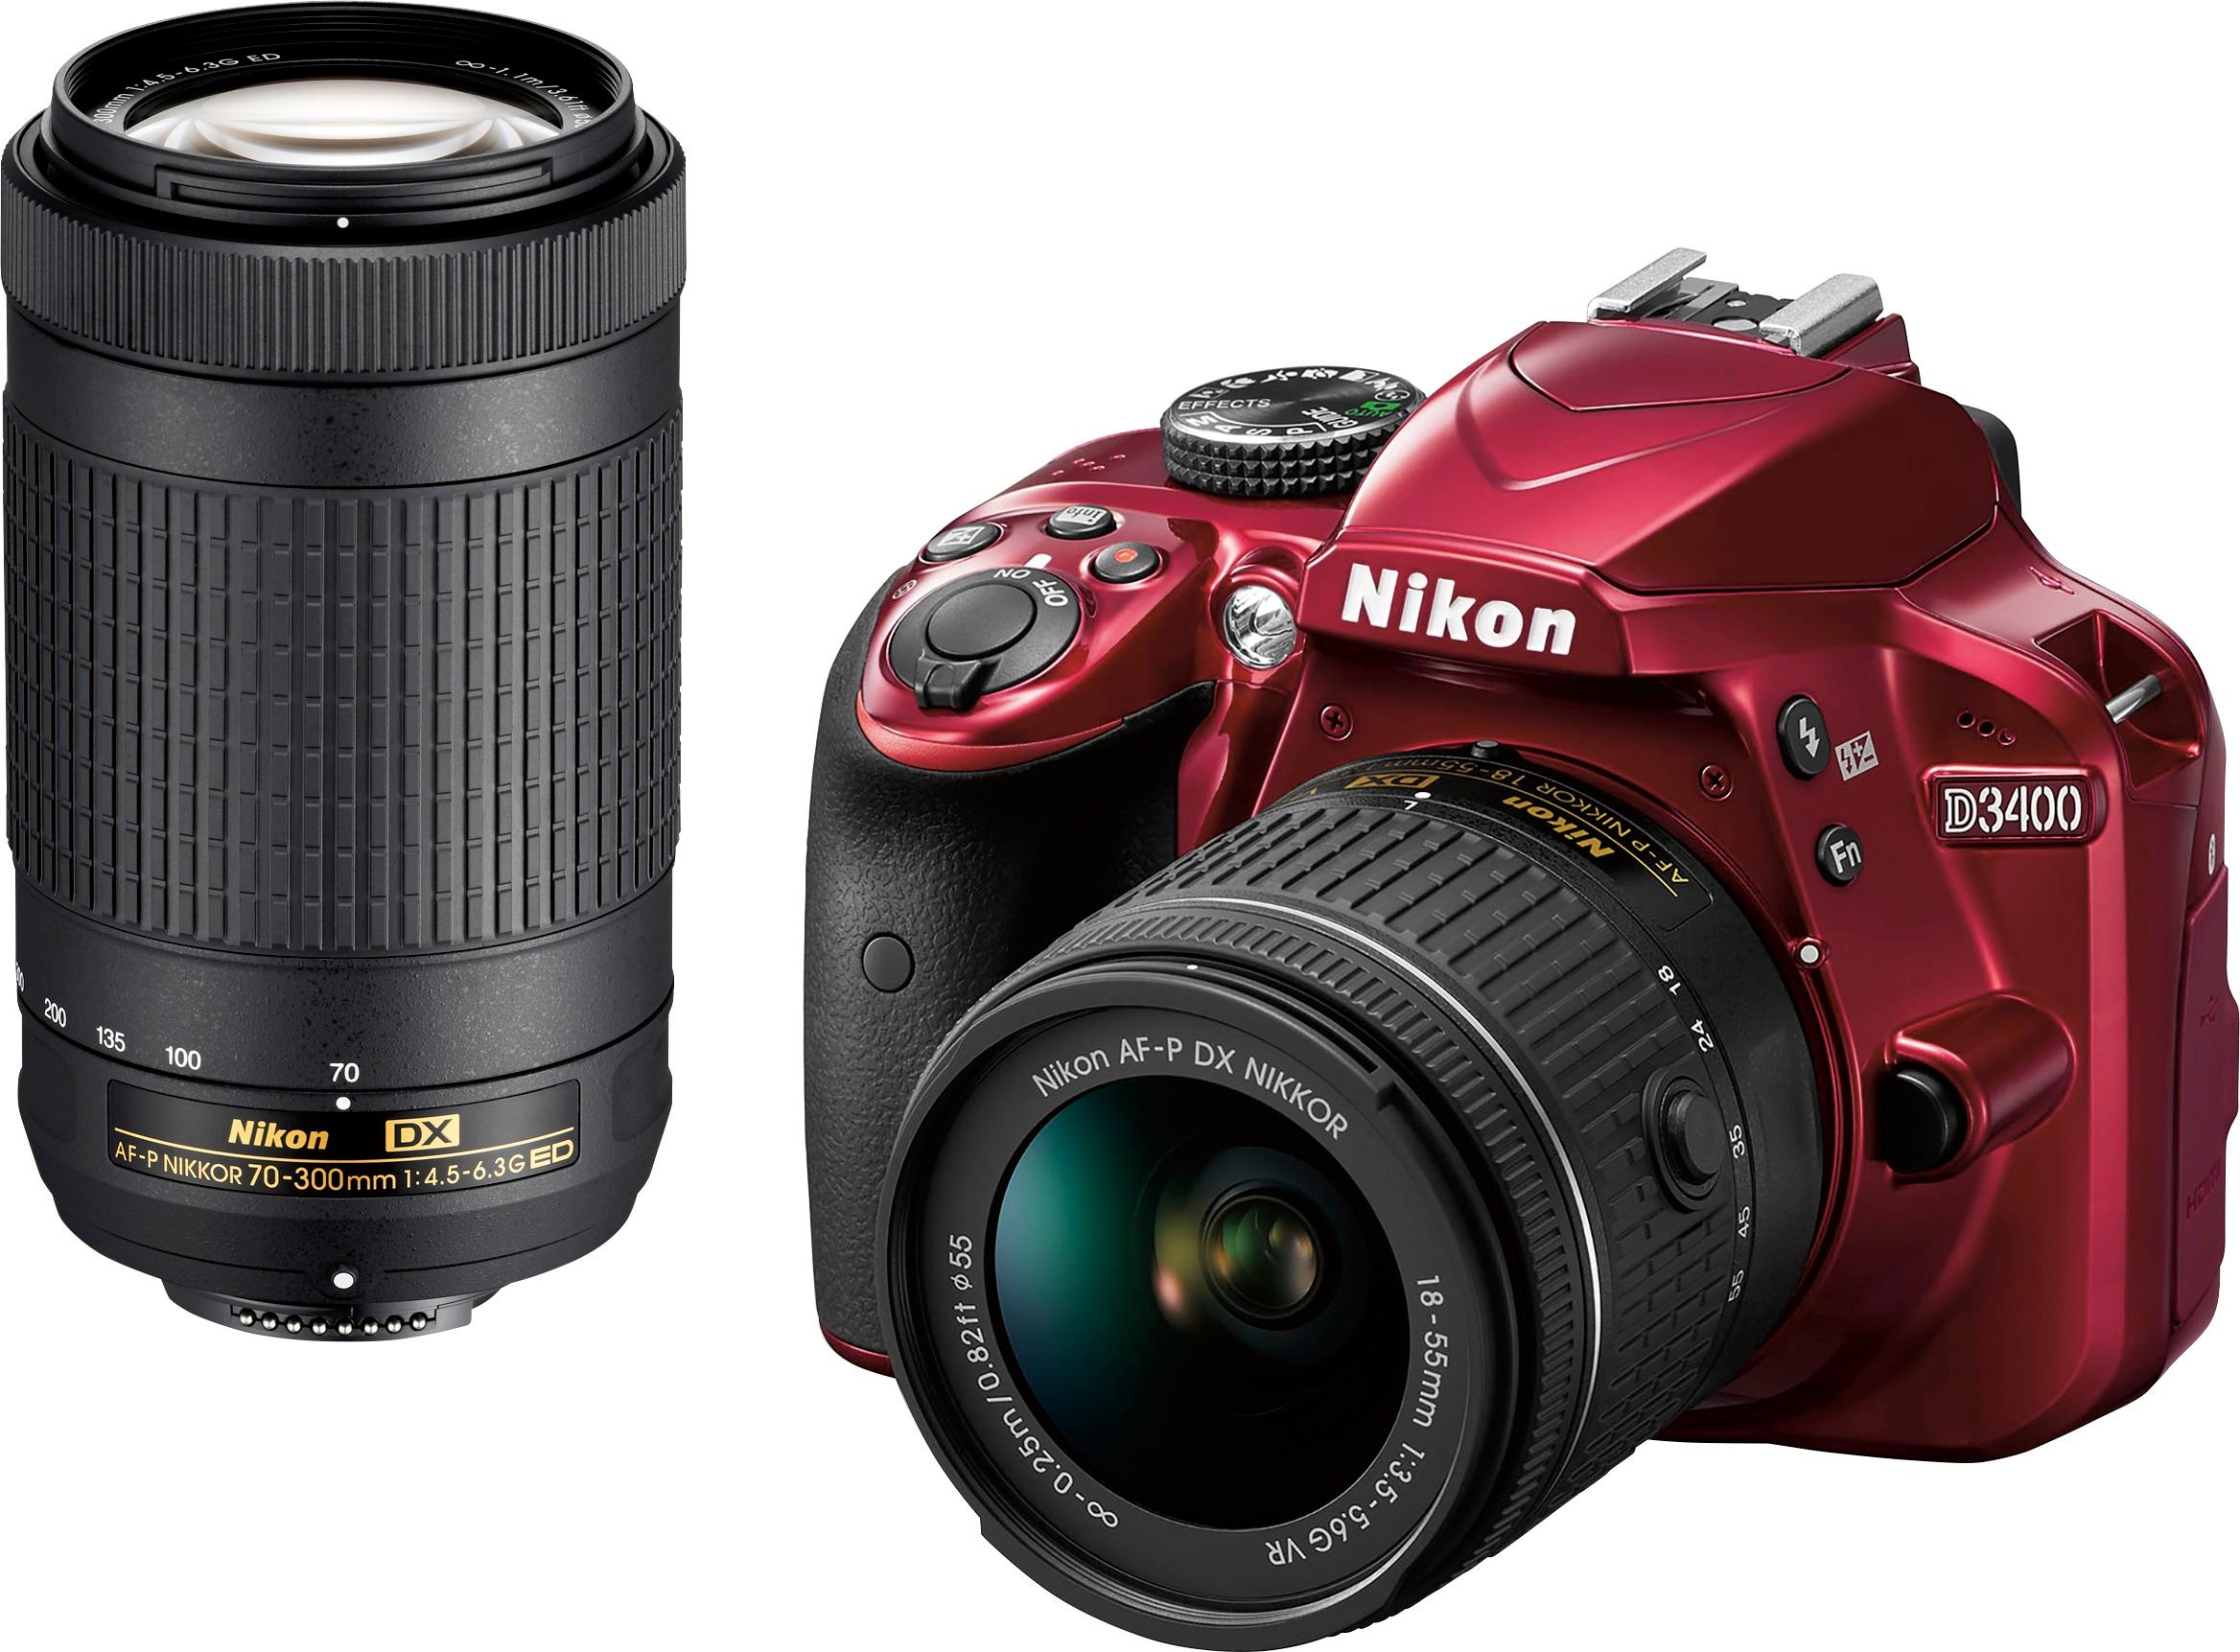 Nikon D3400 - buy it or not? 